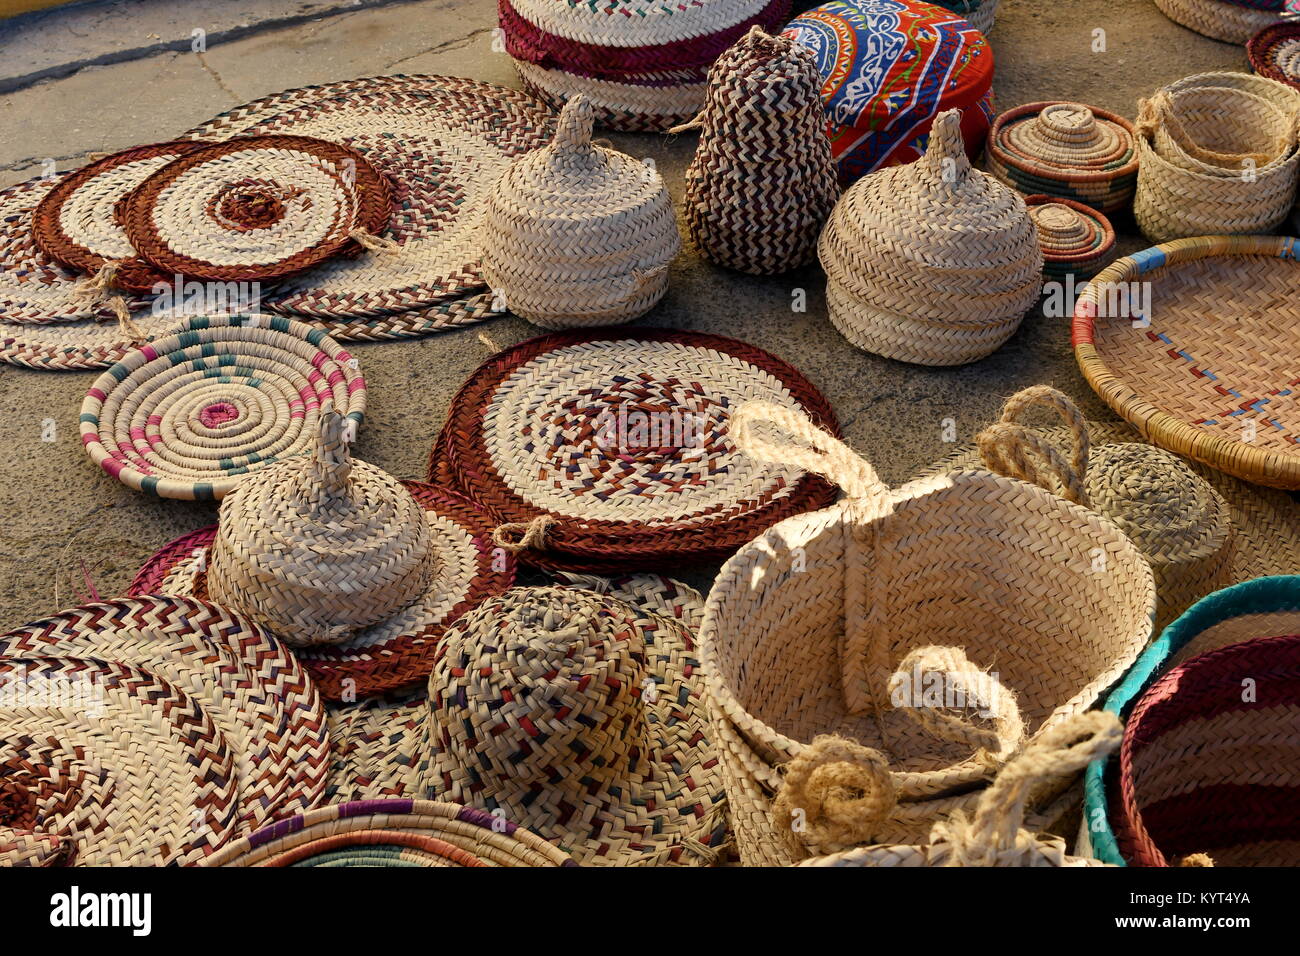 Saudi Arabia Arts and Crafts Handmade Stock Photo